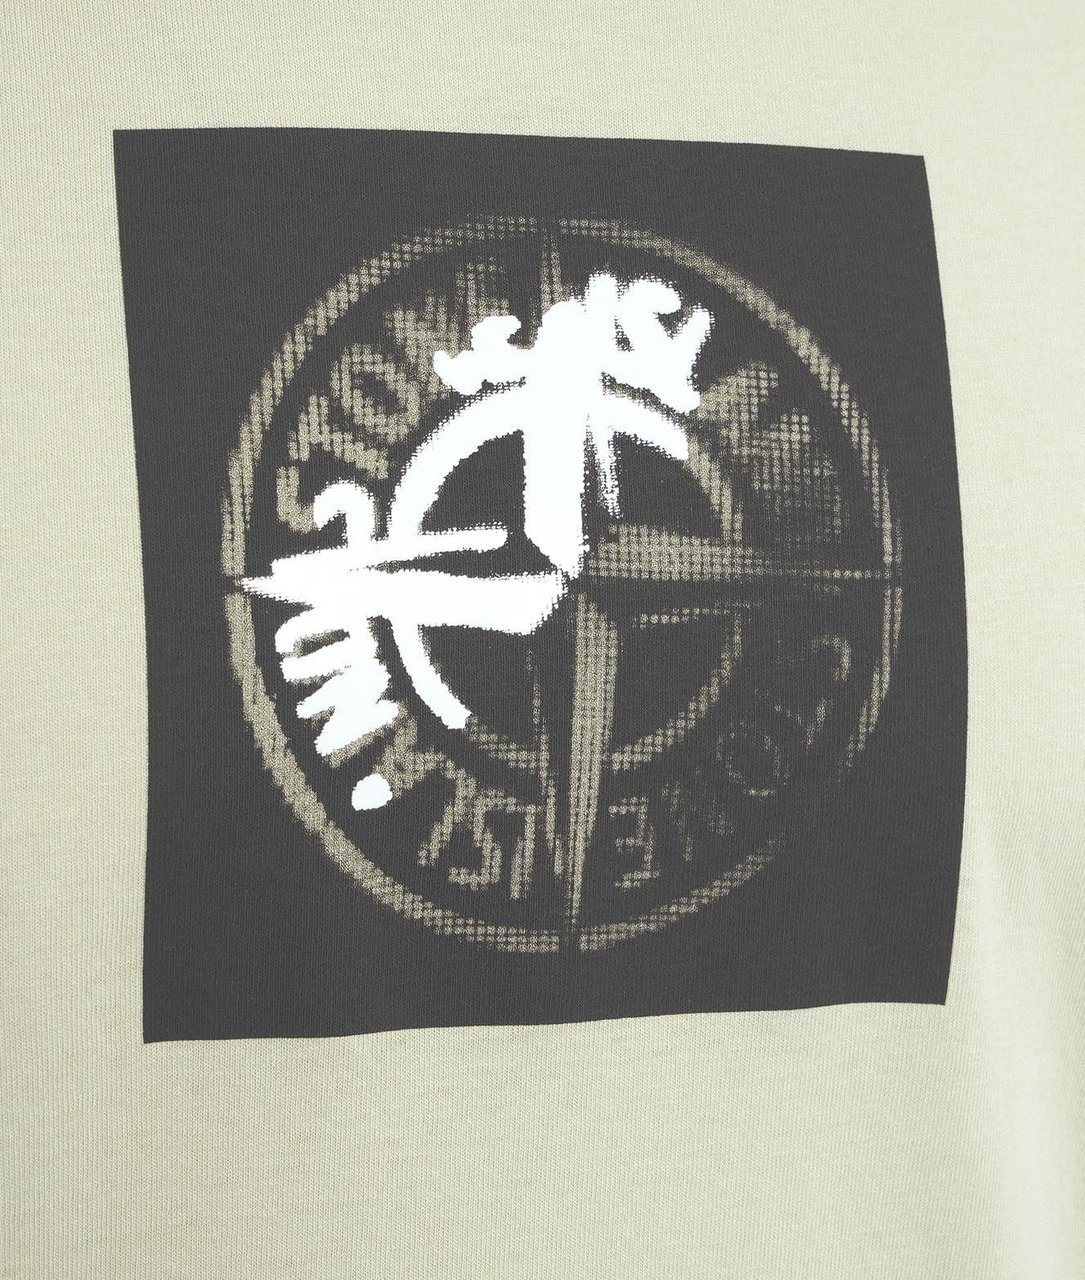 Stone Island T-shirt with logo print Wit